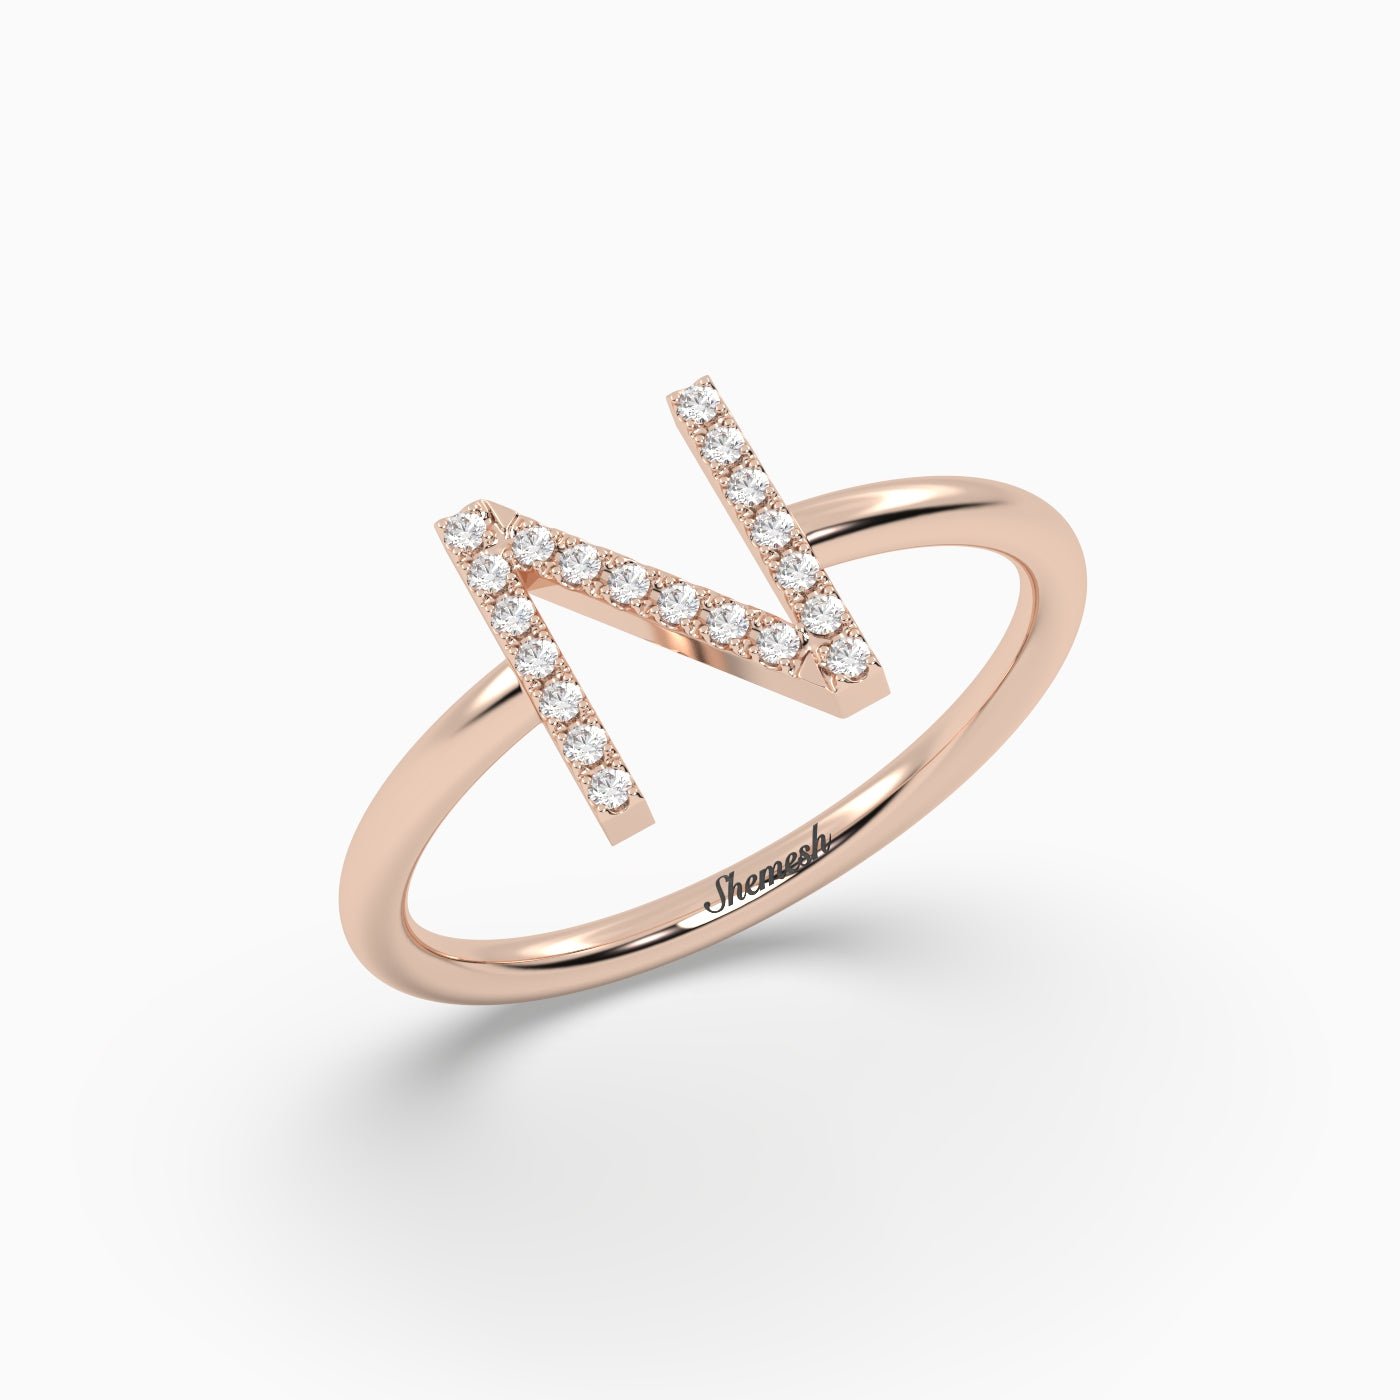 18K Gold "N" Initial Ring - shemesh_diamonds